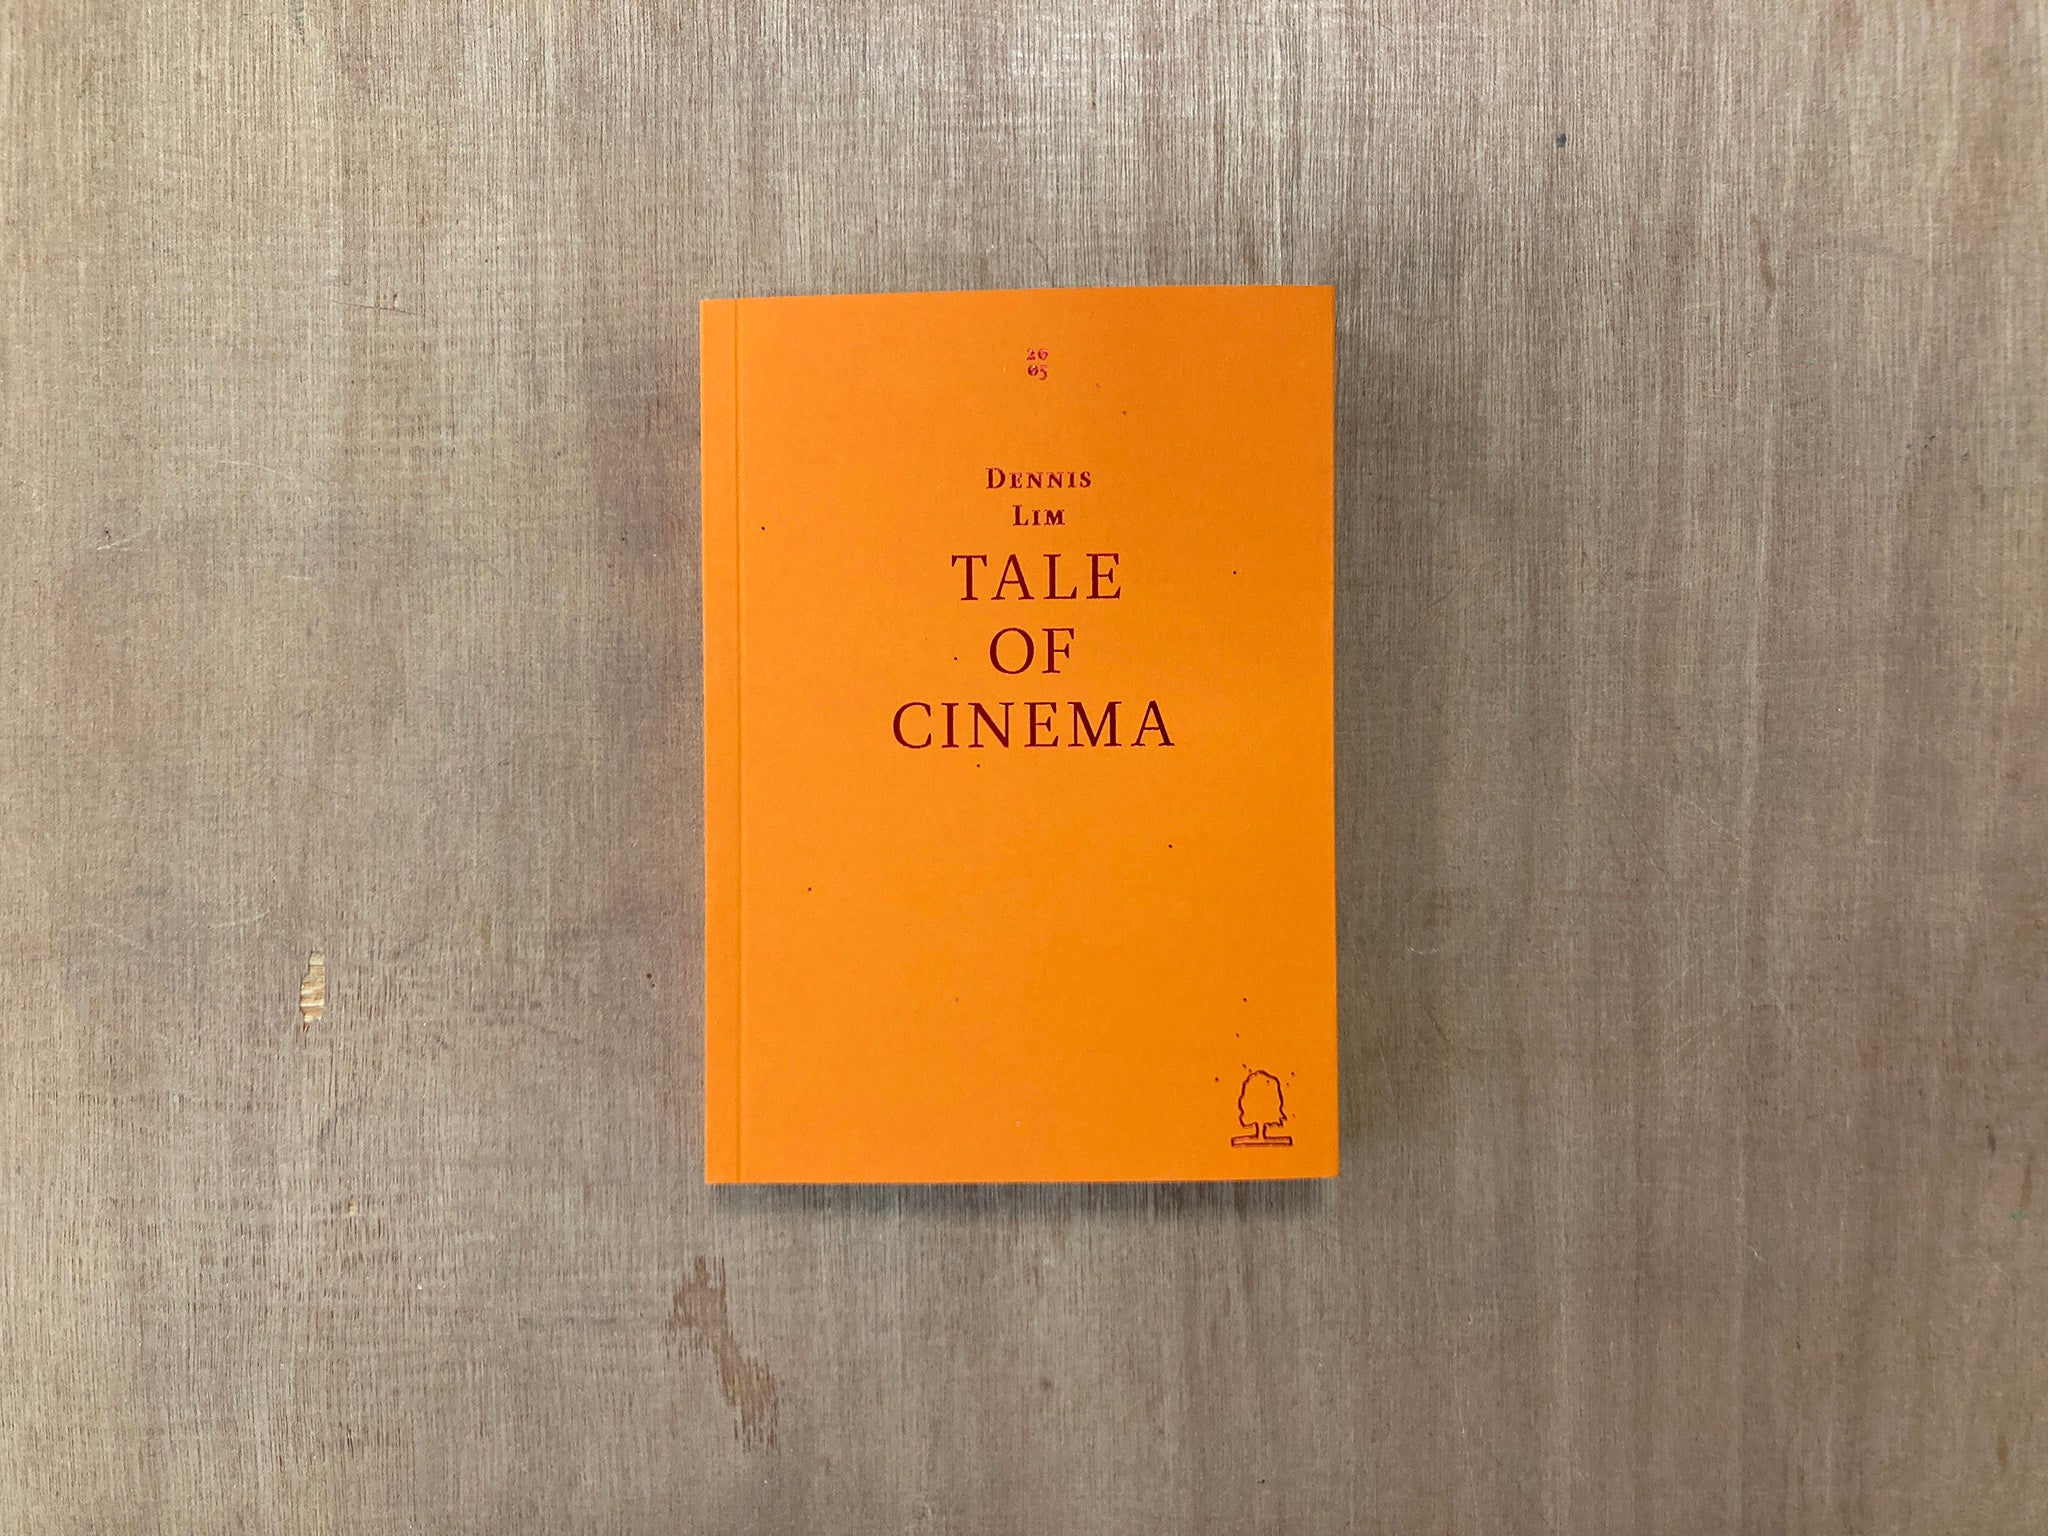 TALE OF CINEMA by Dennis Lim